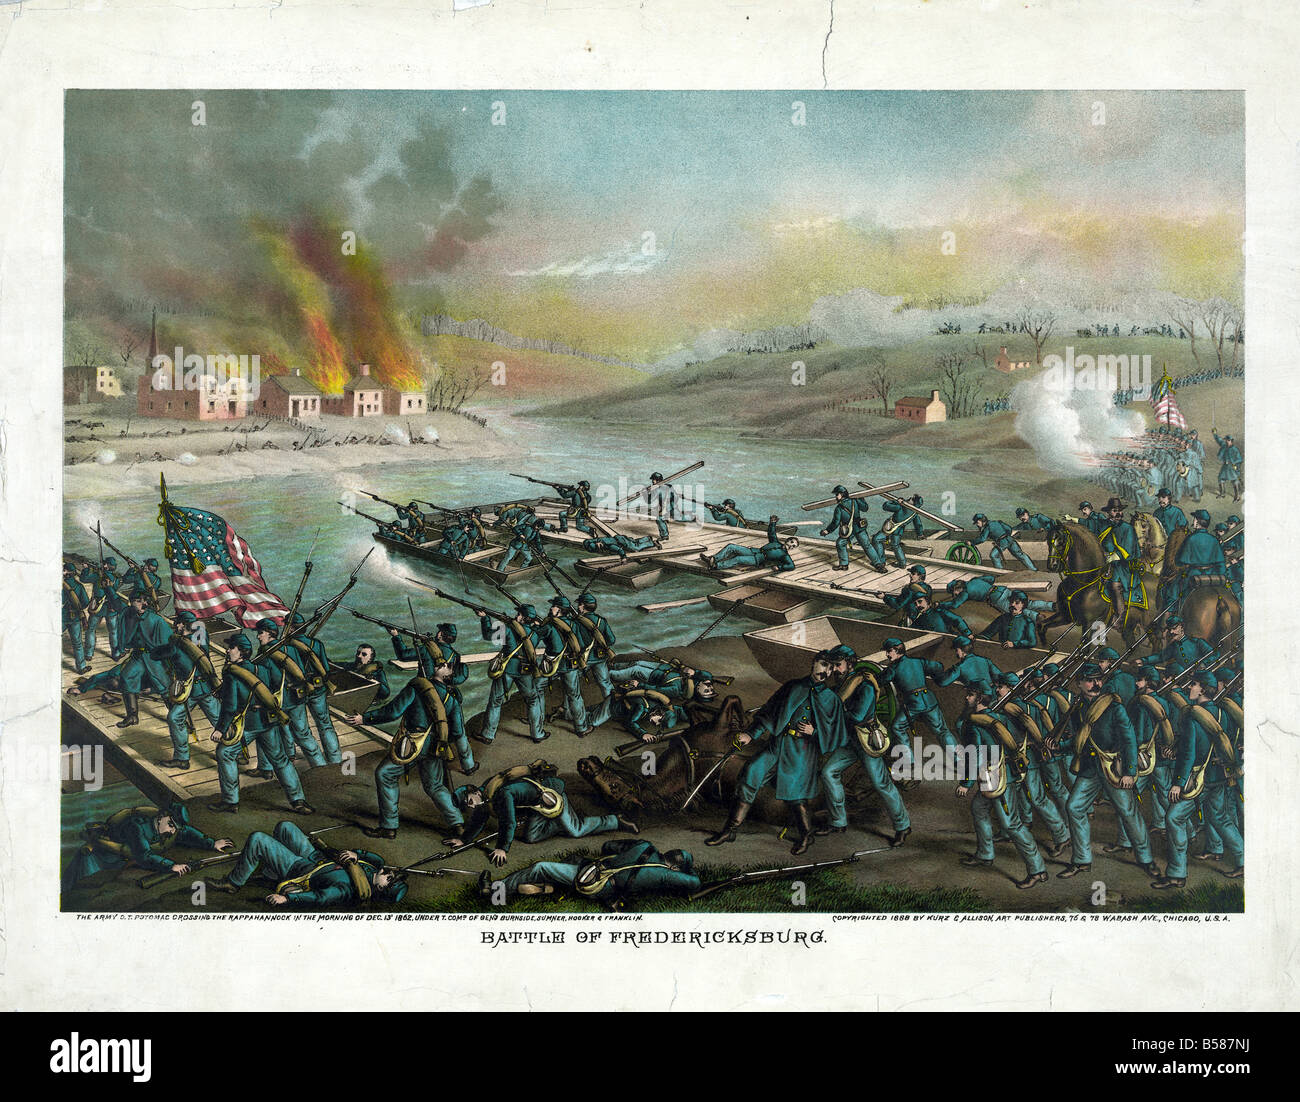 La traversata del rappahannock - Battaglia di fredericksburg Foto Stock